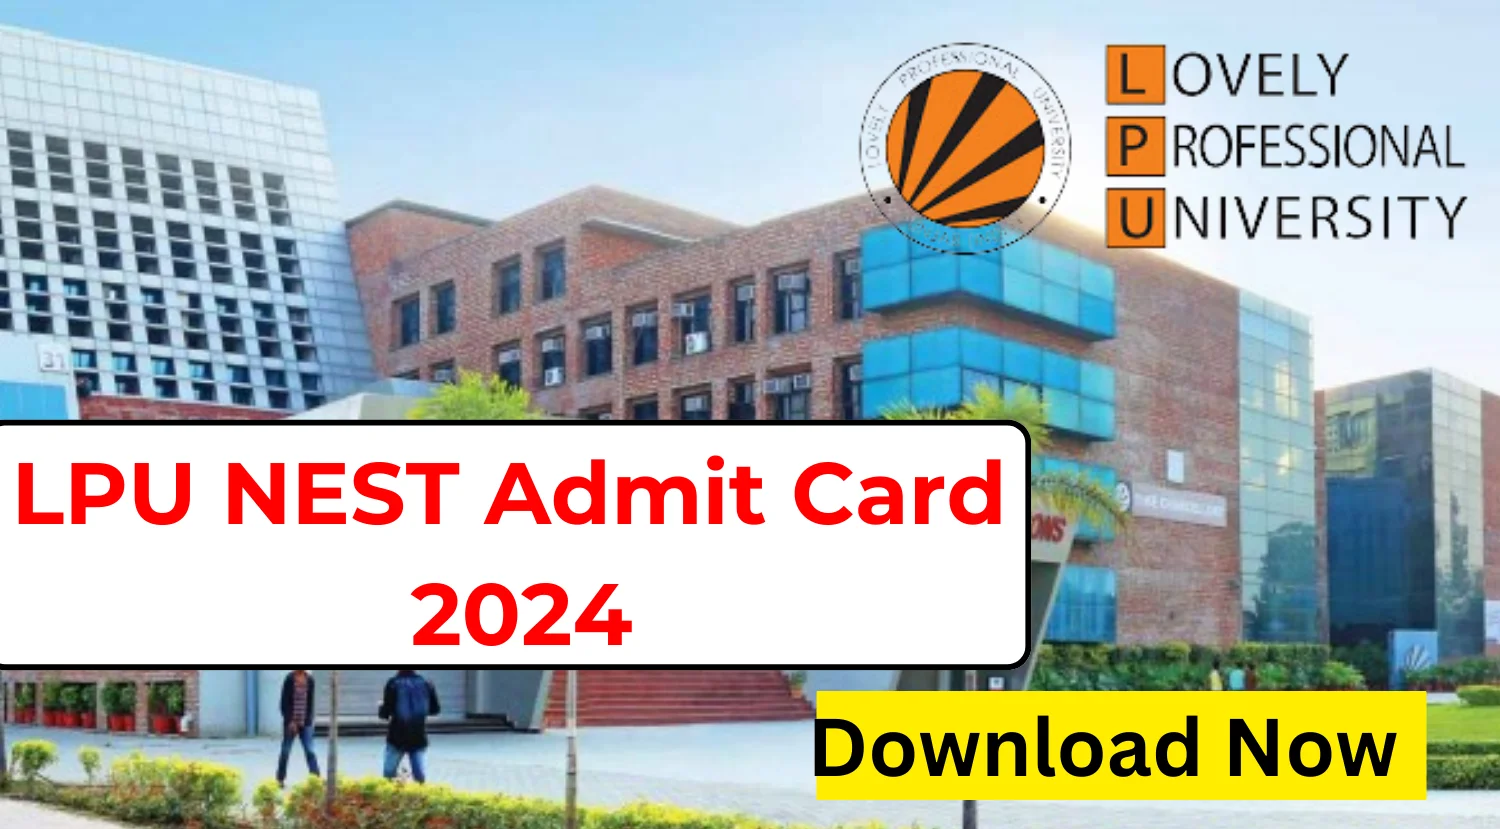 LPU NEST Admit Card 2024